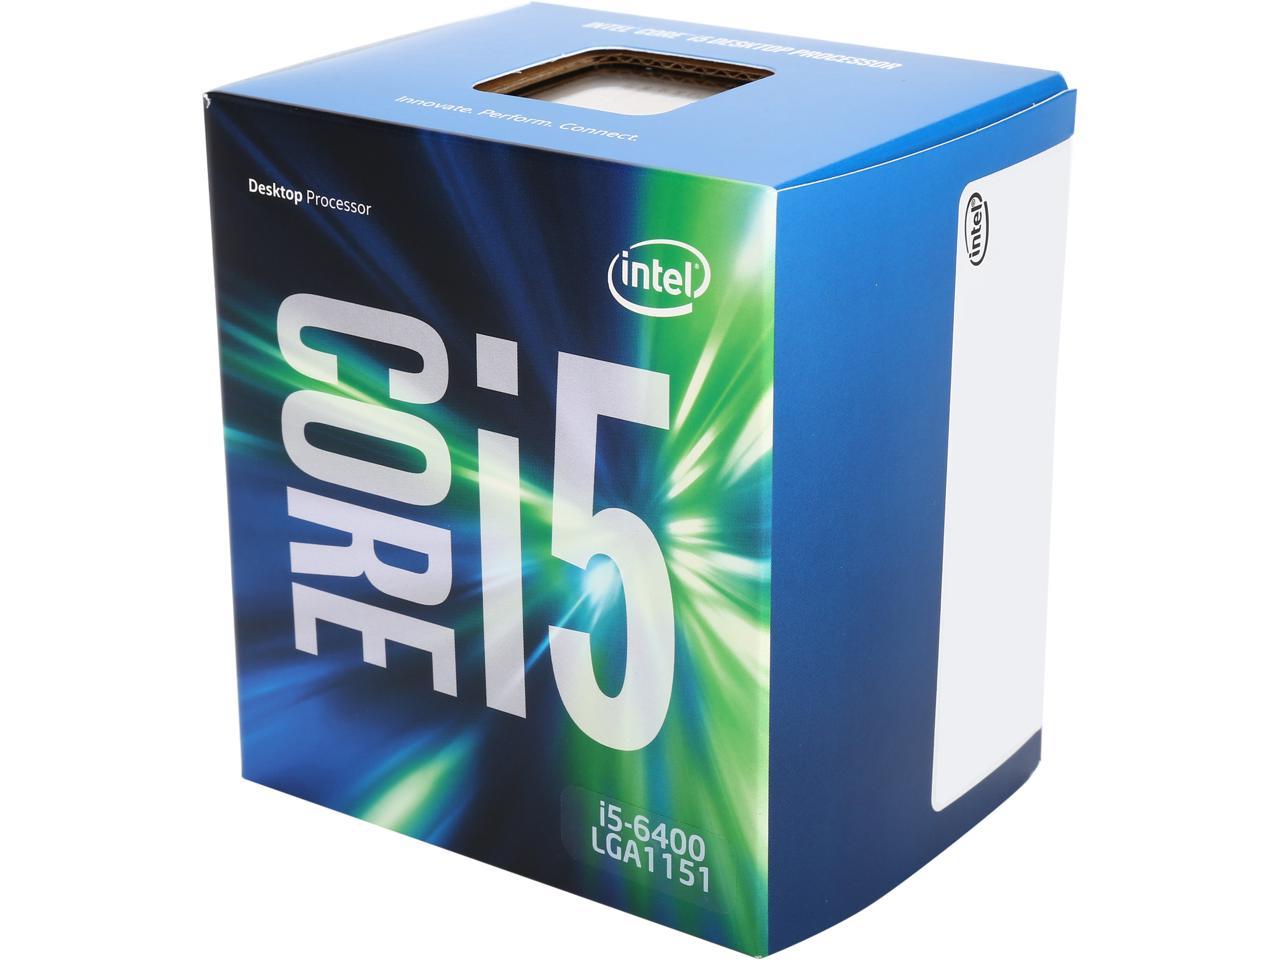 Intel Core i5-6400 Skylake Quad-Core 2.7 GHz LGA 1151 65W BX80662I56400 Desktop Processor Intel HD Graphics 530